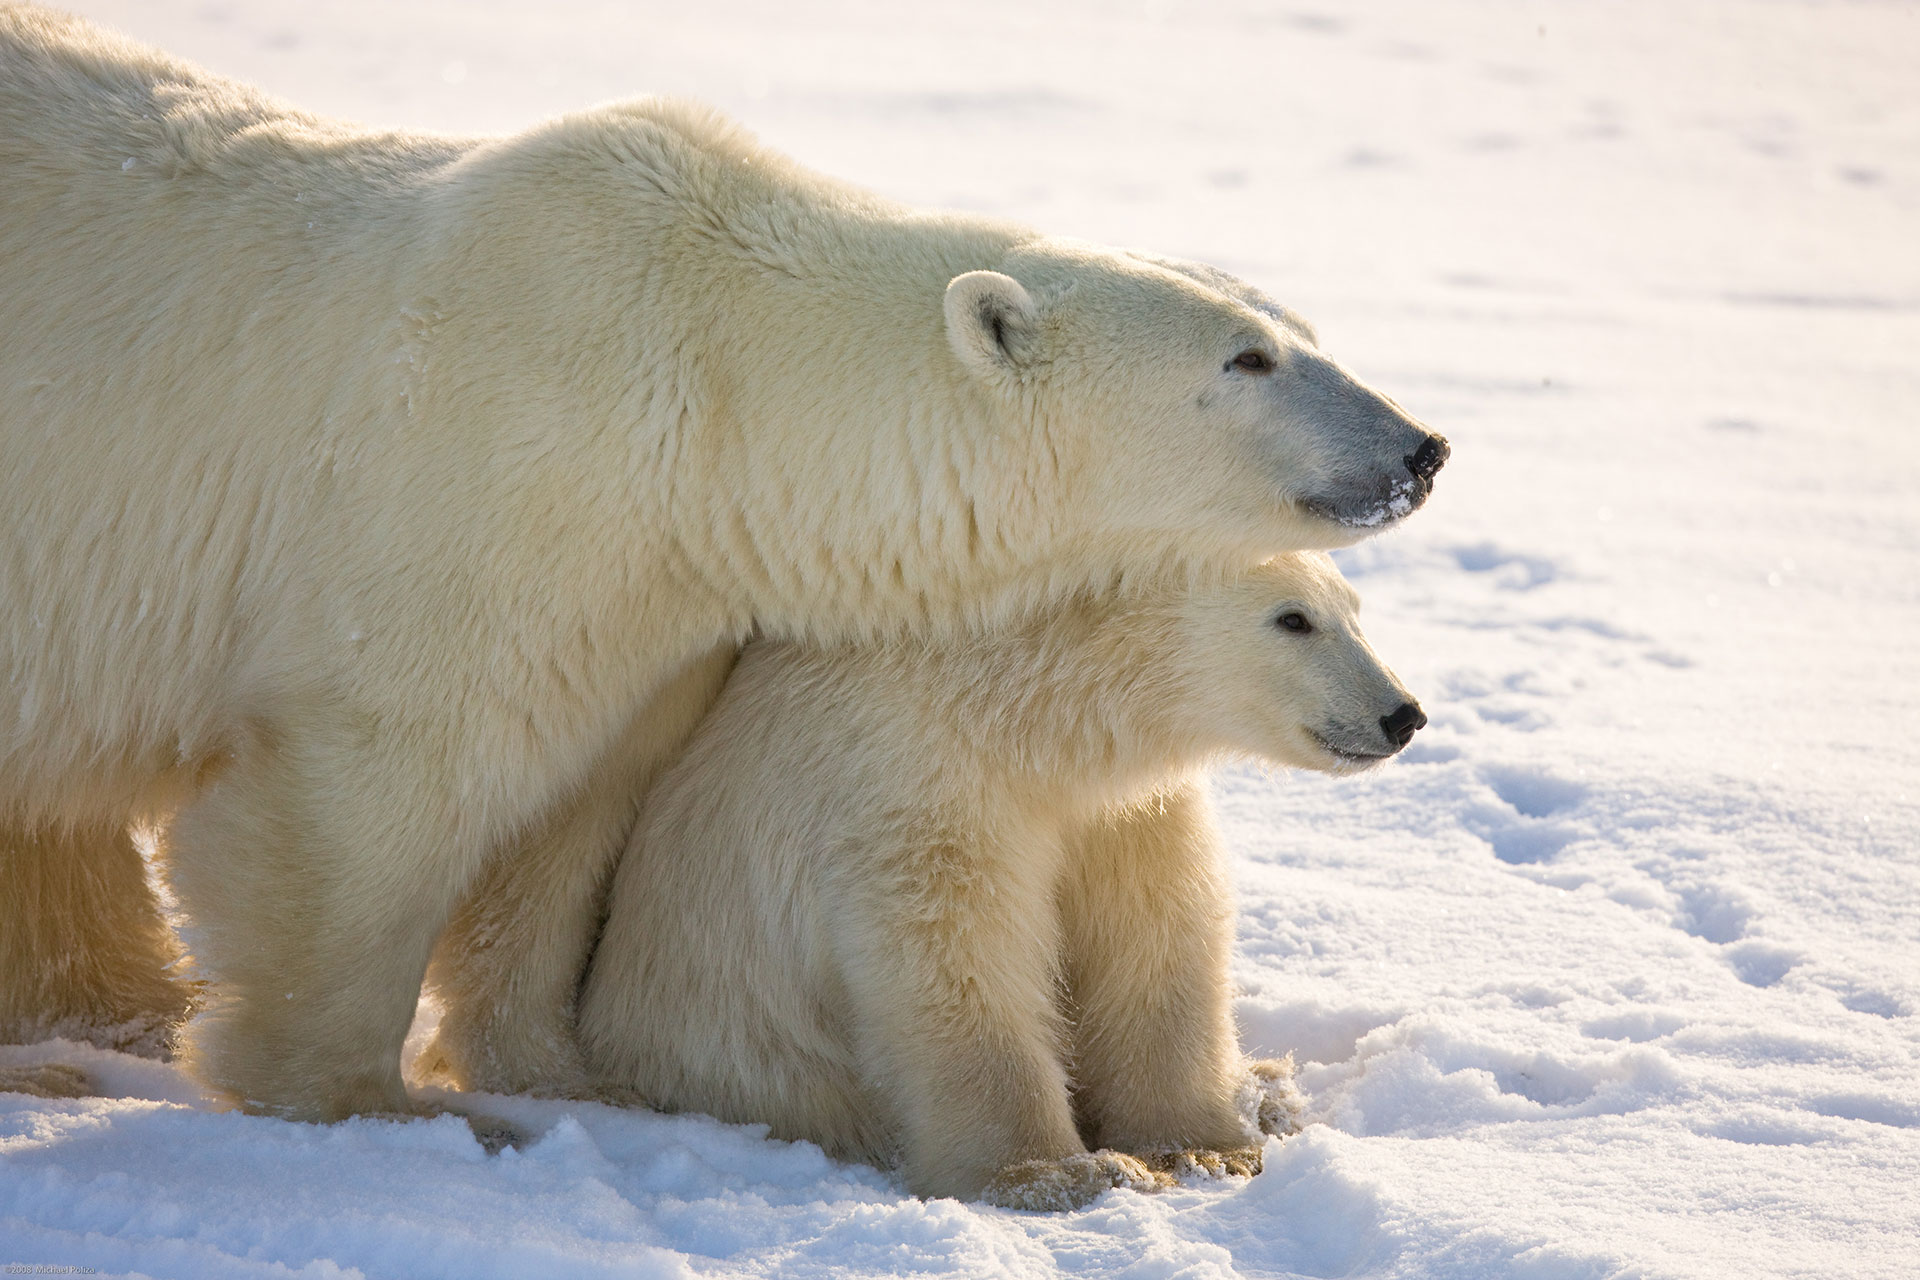 Polar bear mom and cub. Michael Poliza photo.